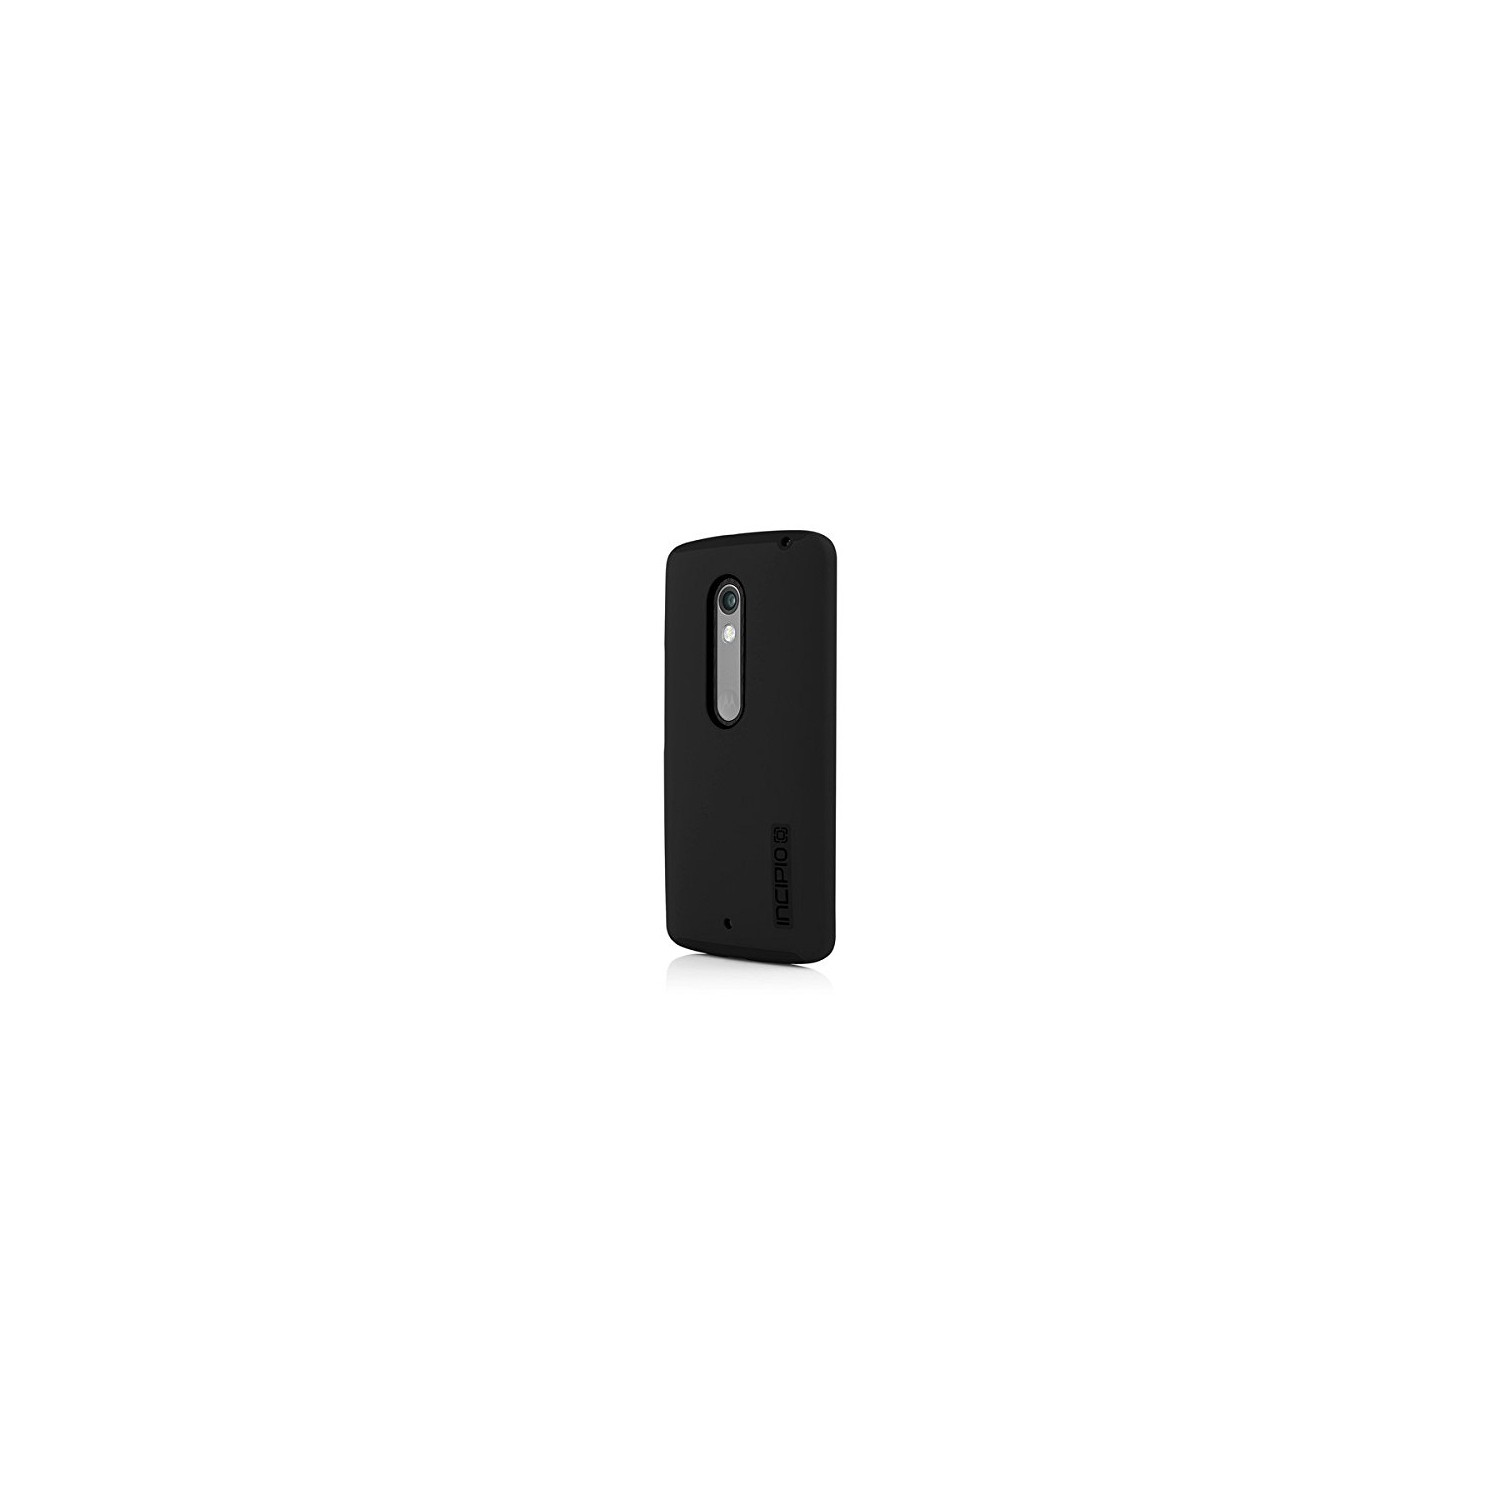 Incipio DualPro Carrying Case for Motorola Droid MAXX 2/Motorola Moto X Play, Retail Packaging, Black